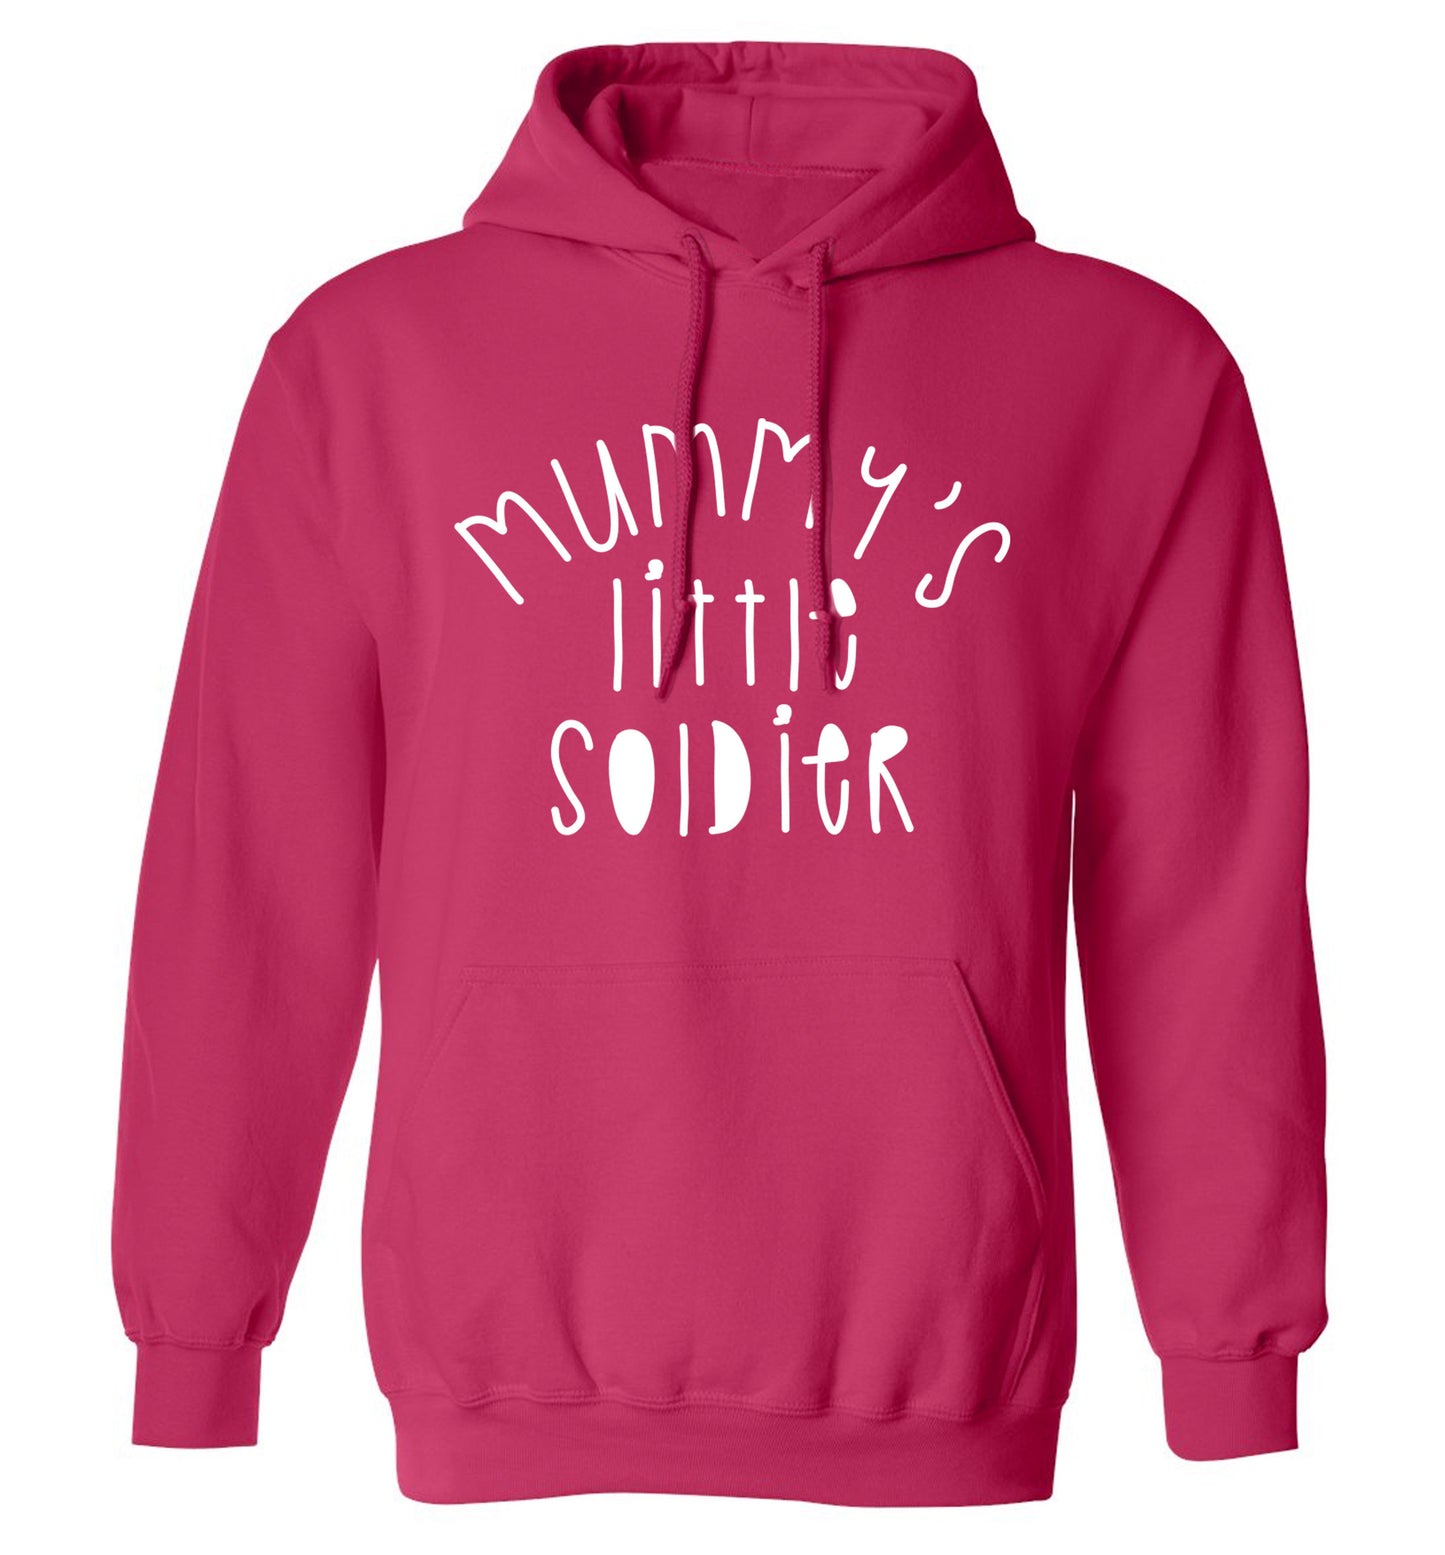 Mummy's little soldier adults unisex pink hoodie 2XL